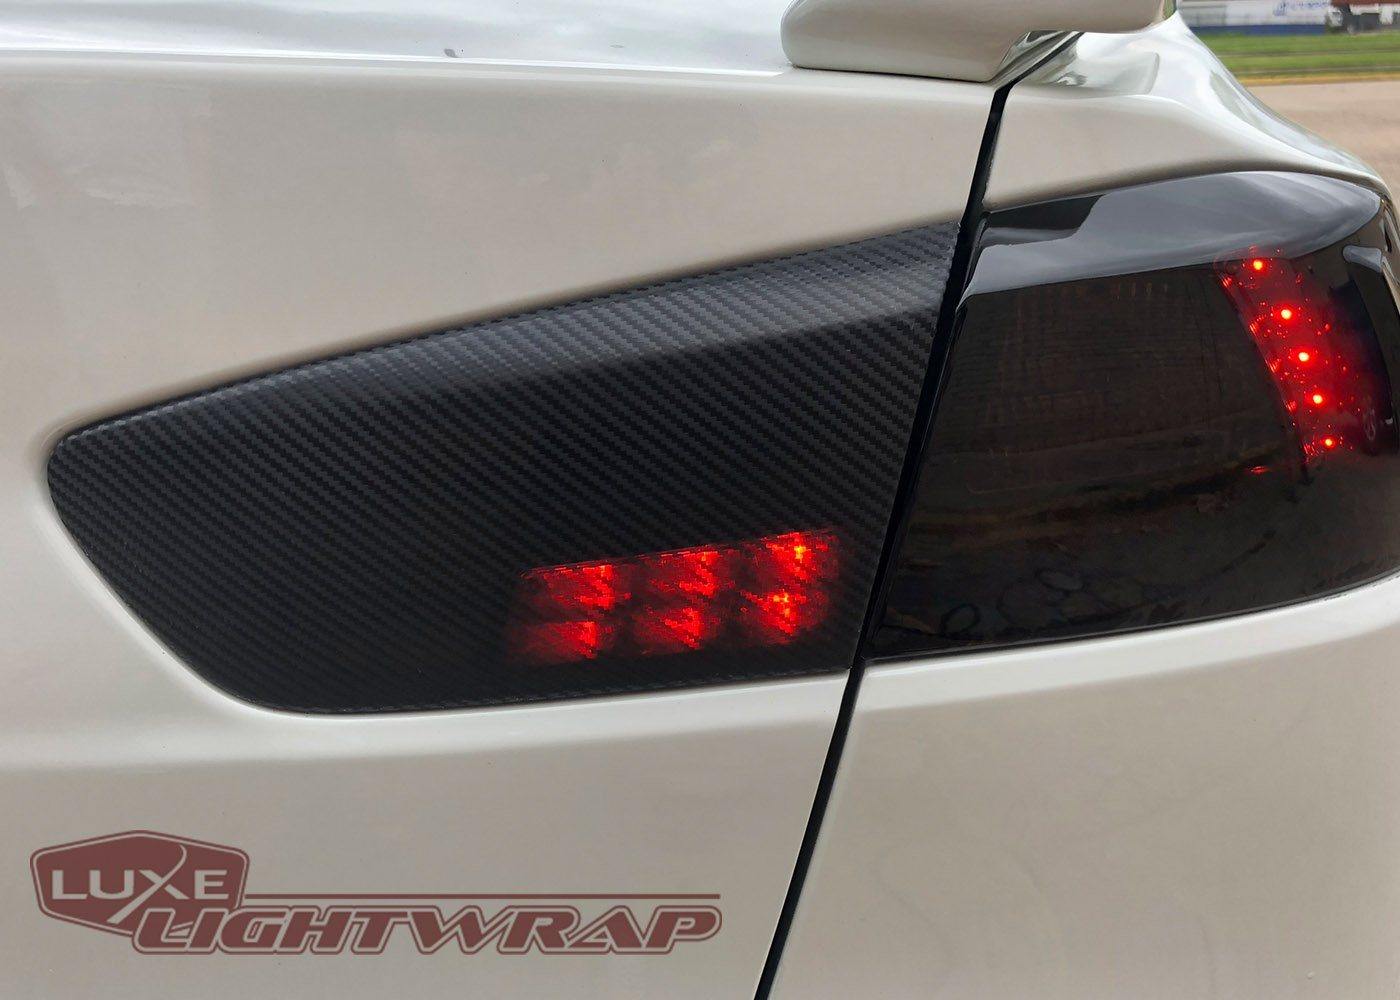 Universal LightWrap Tint Kit - FX Dark Carbon - Luxe Auto Concepts